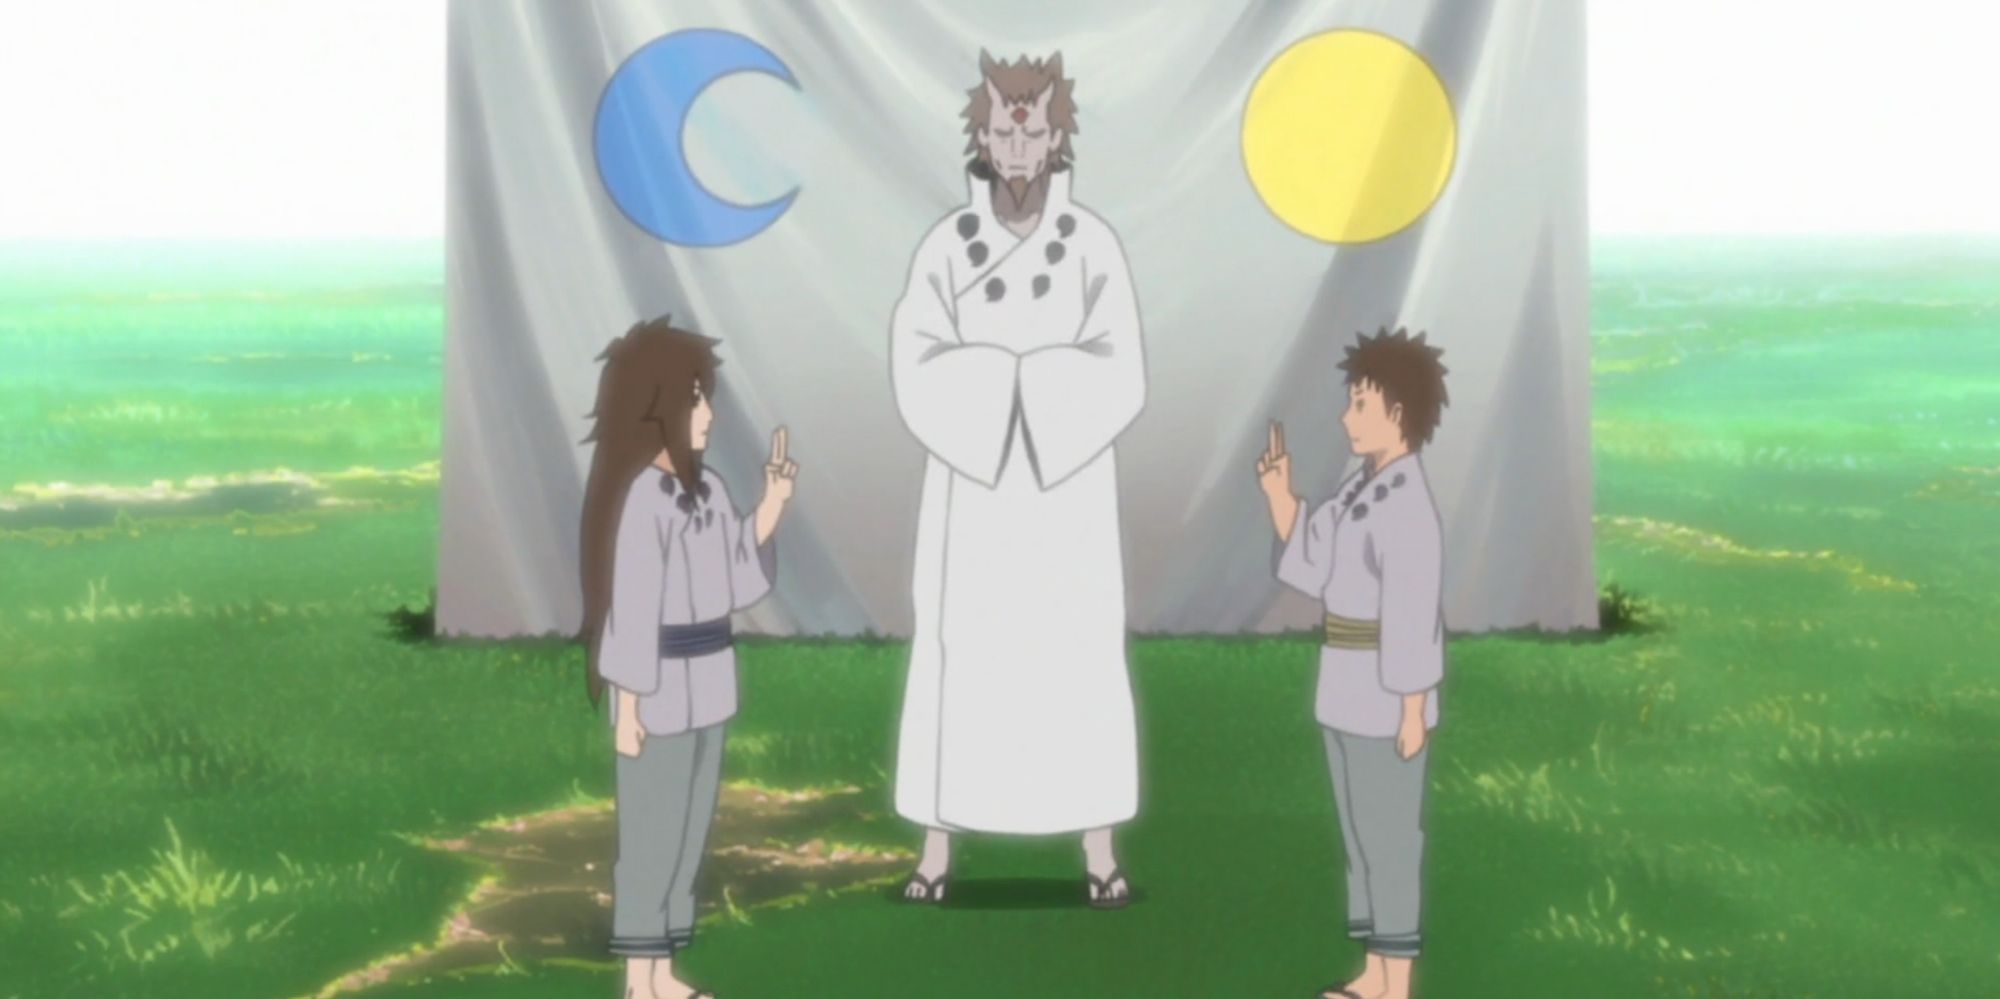 Hagoromo, Asura, and Indra in Naruto